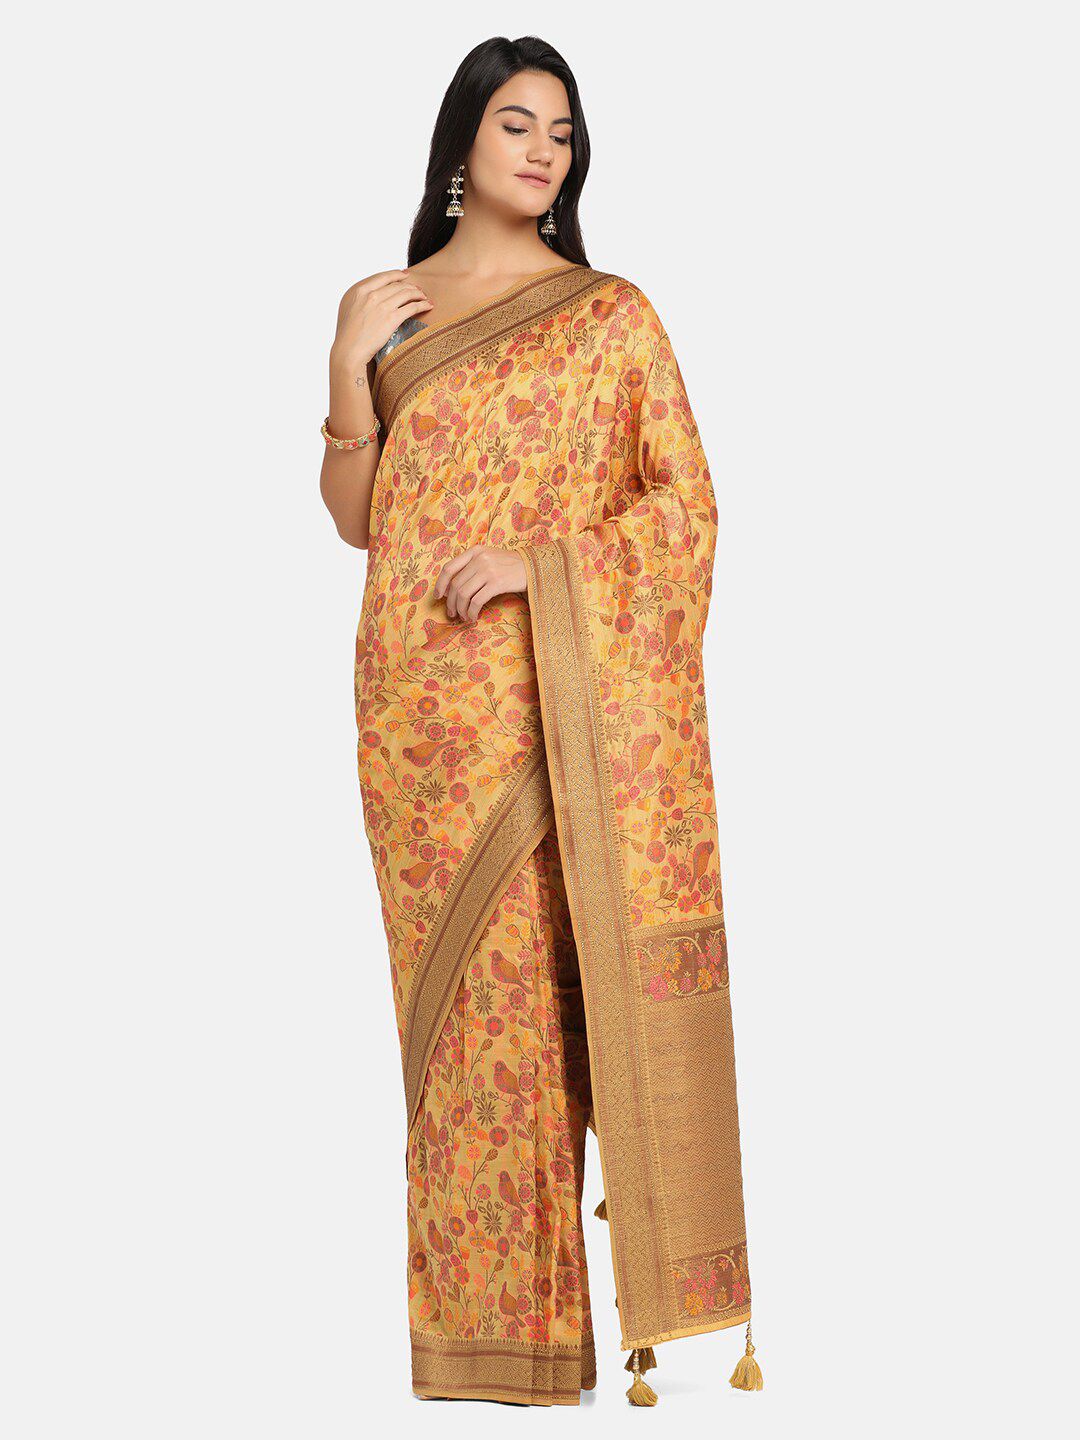 BOMBAY SELECTIONS Yellow & Brown Woven Design Beads and Stones Art Silk Banarasi Saree Price in India